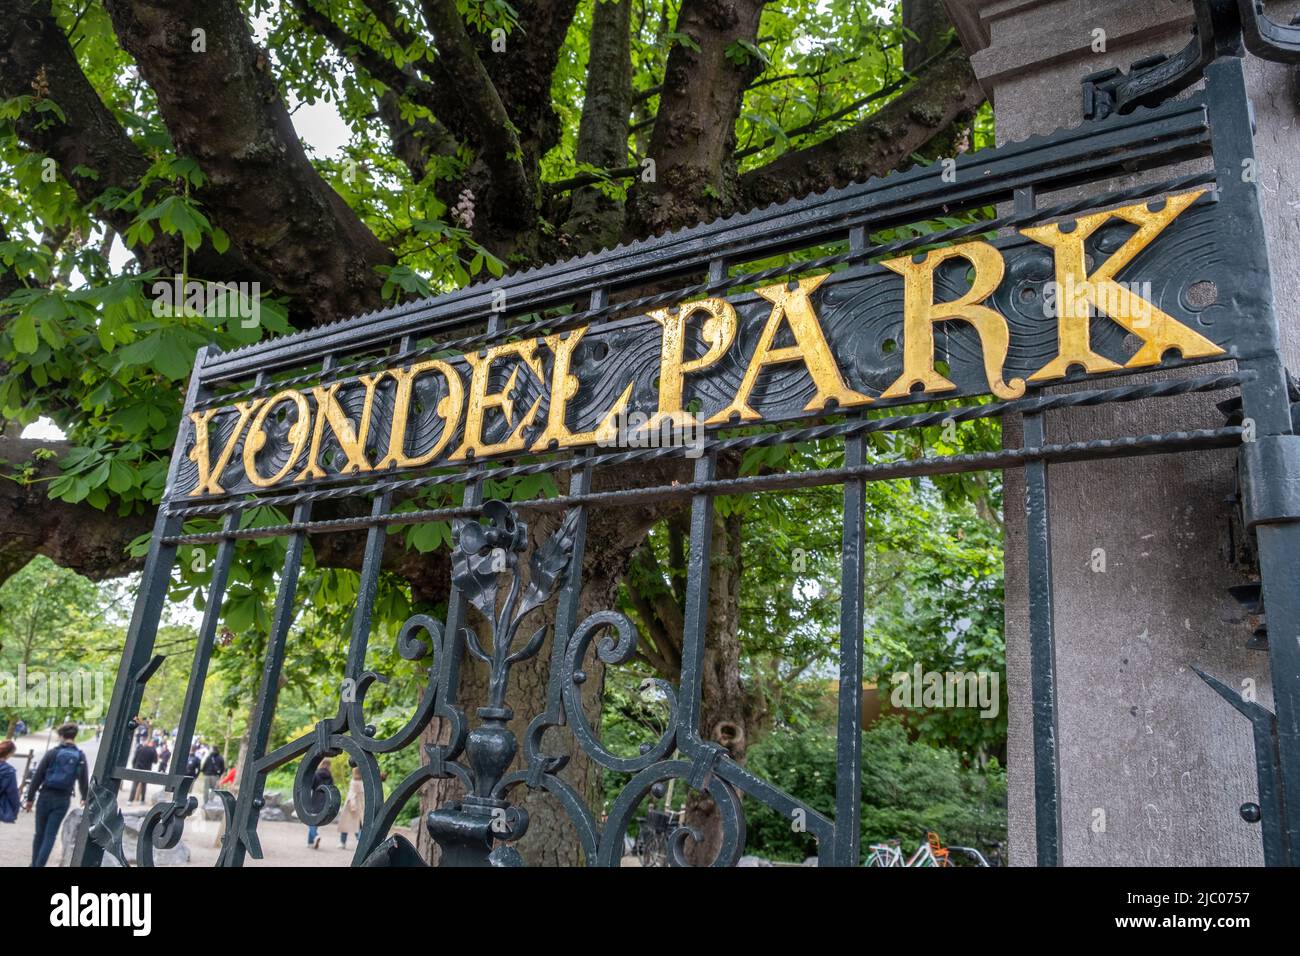 Amsterdam Vondelpark entrance gate open, gold letters text. Vondel park, Dutch public urban garden at the city center. Netherlands Stock Photo